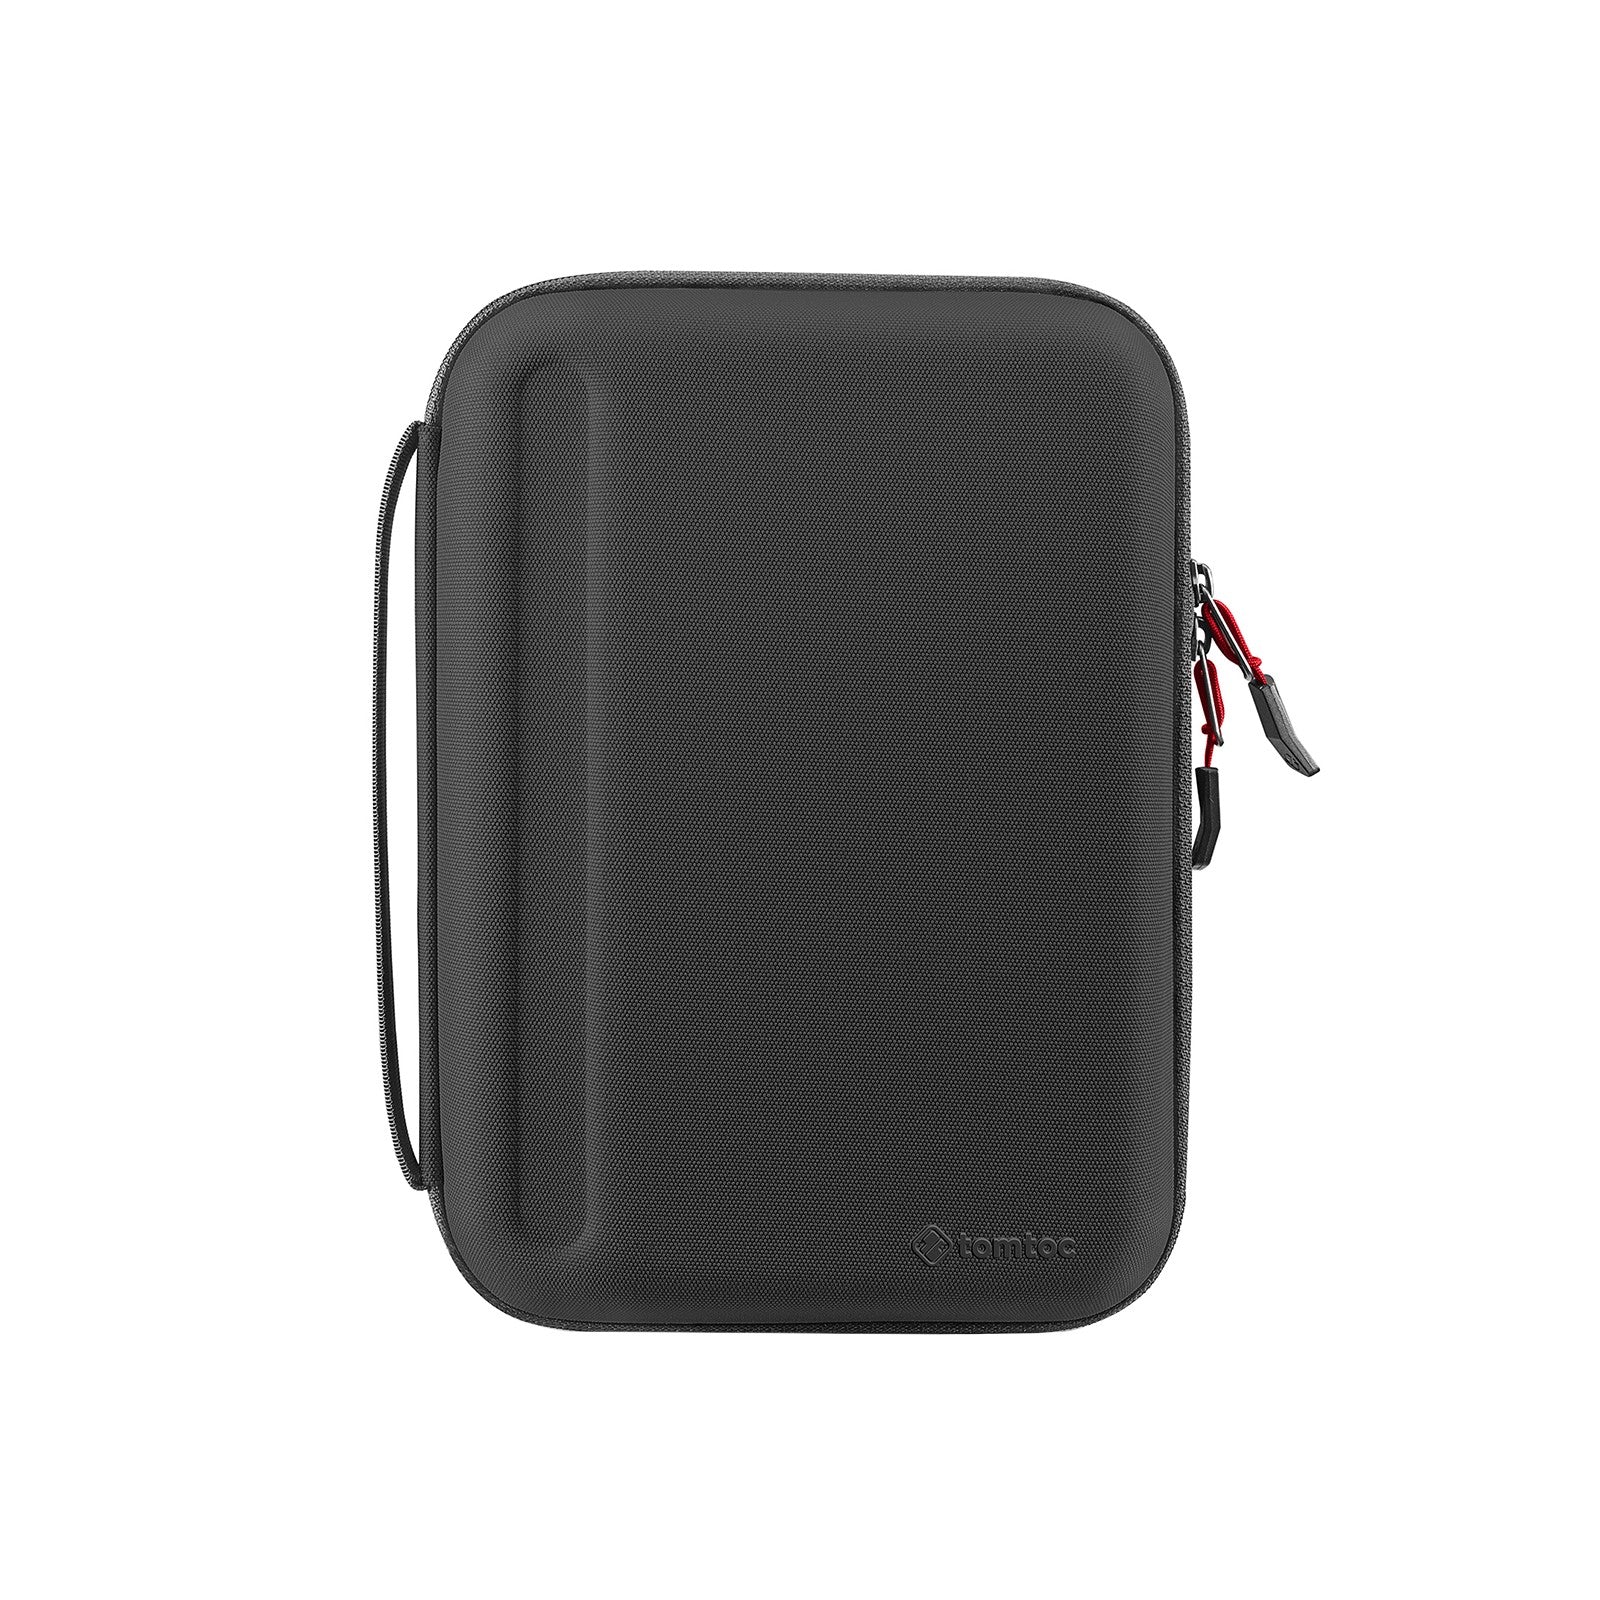 FancyCase-B06 Portfolio iPad Case for 11-inch iPad Air/Pro | Black